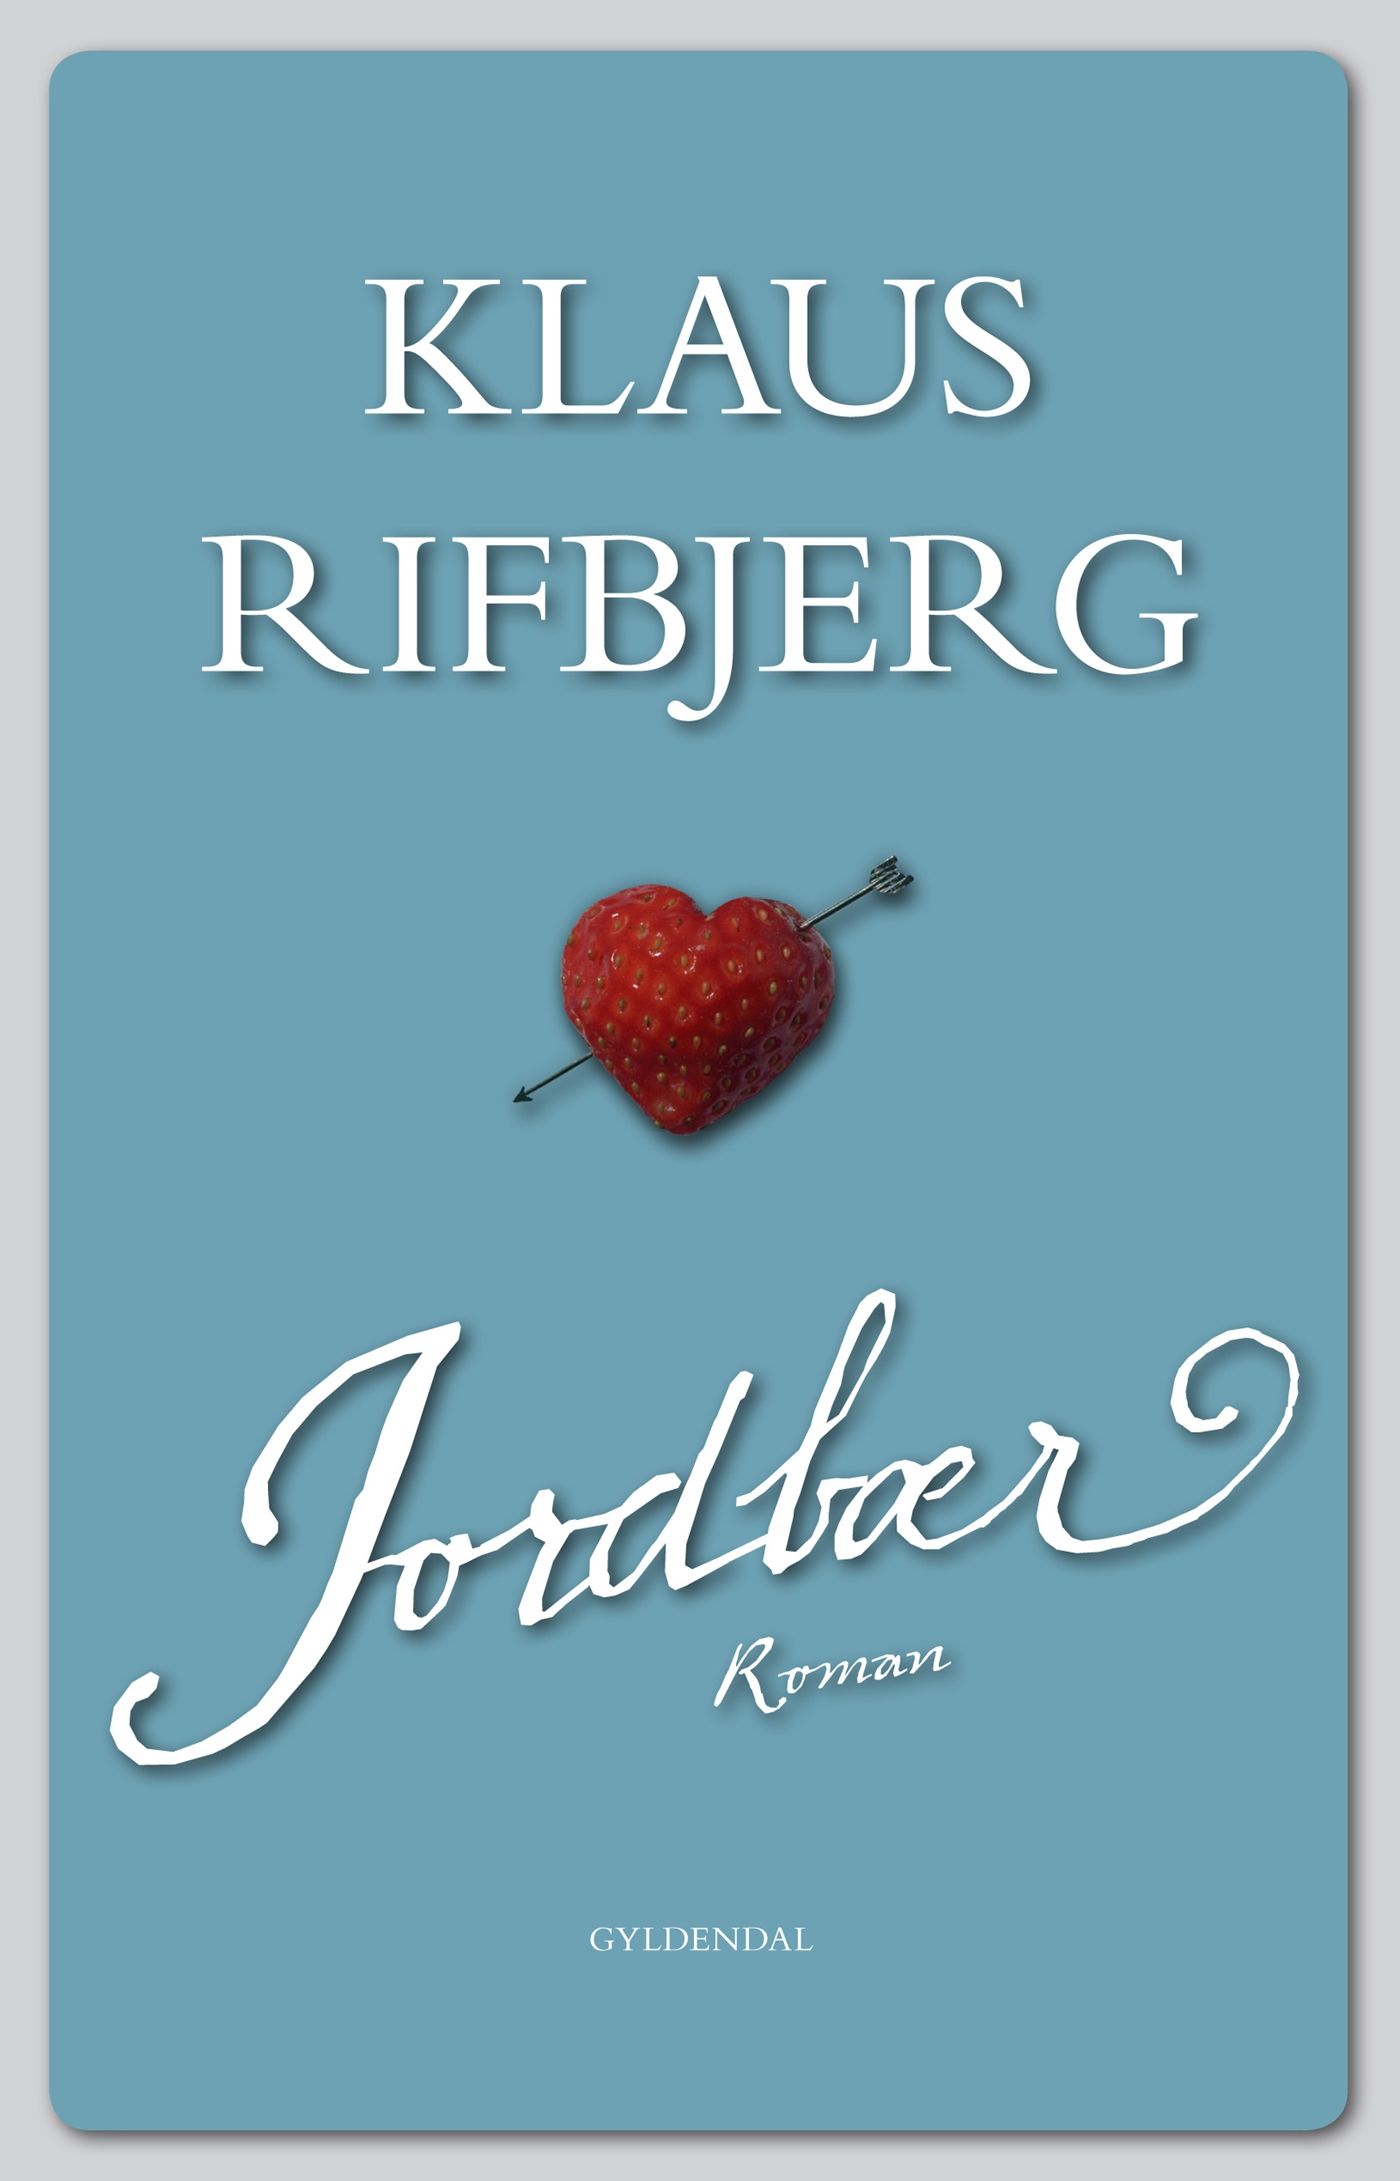 Jordbær, eBook by Klaus Rifbjerg